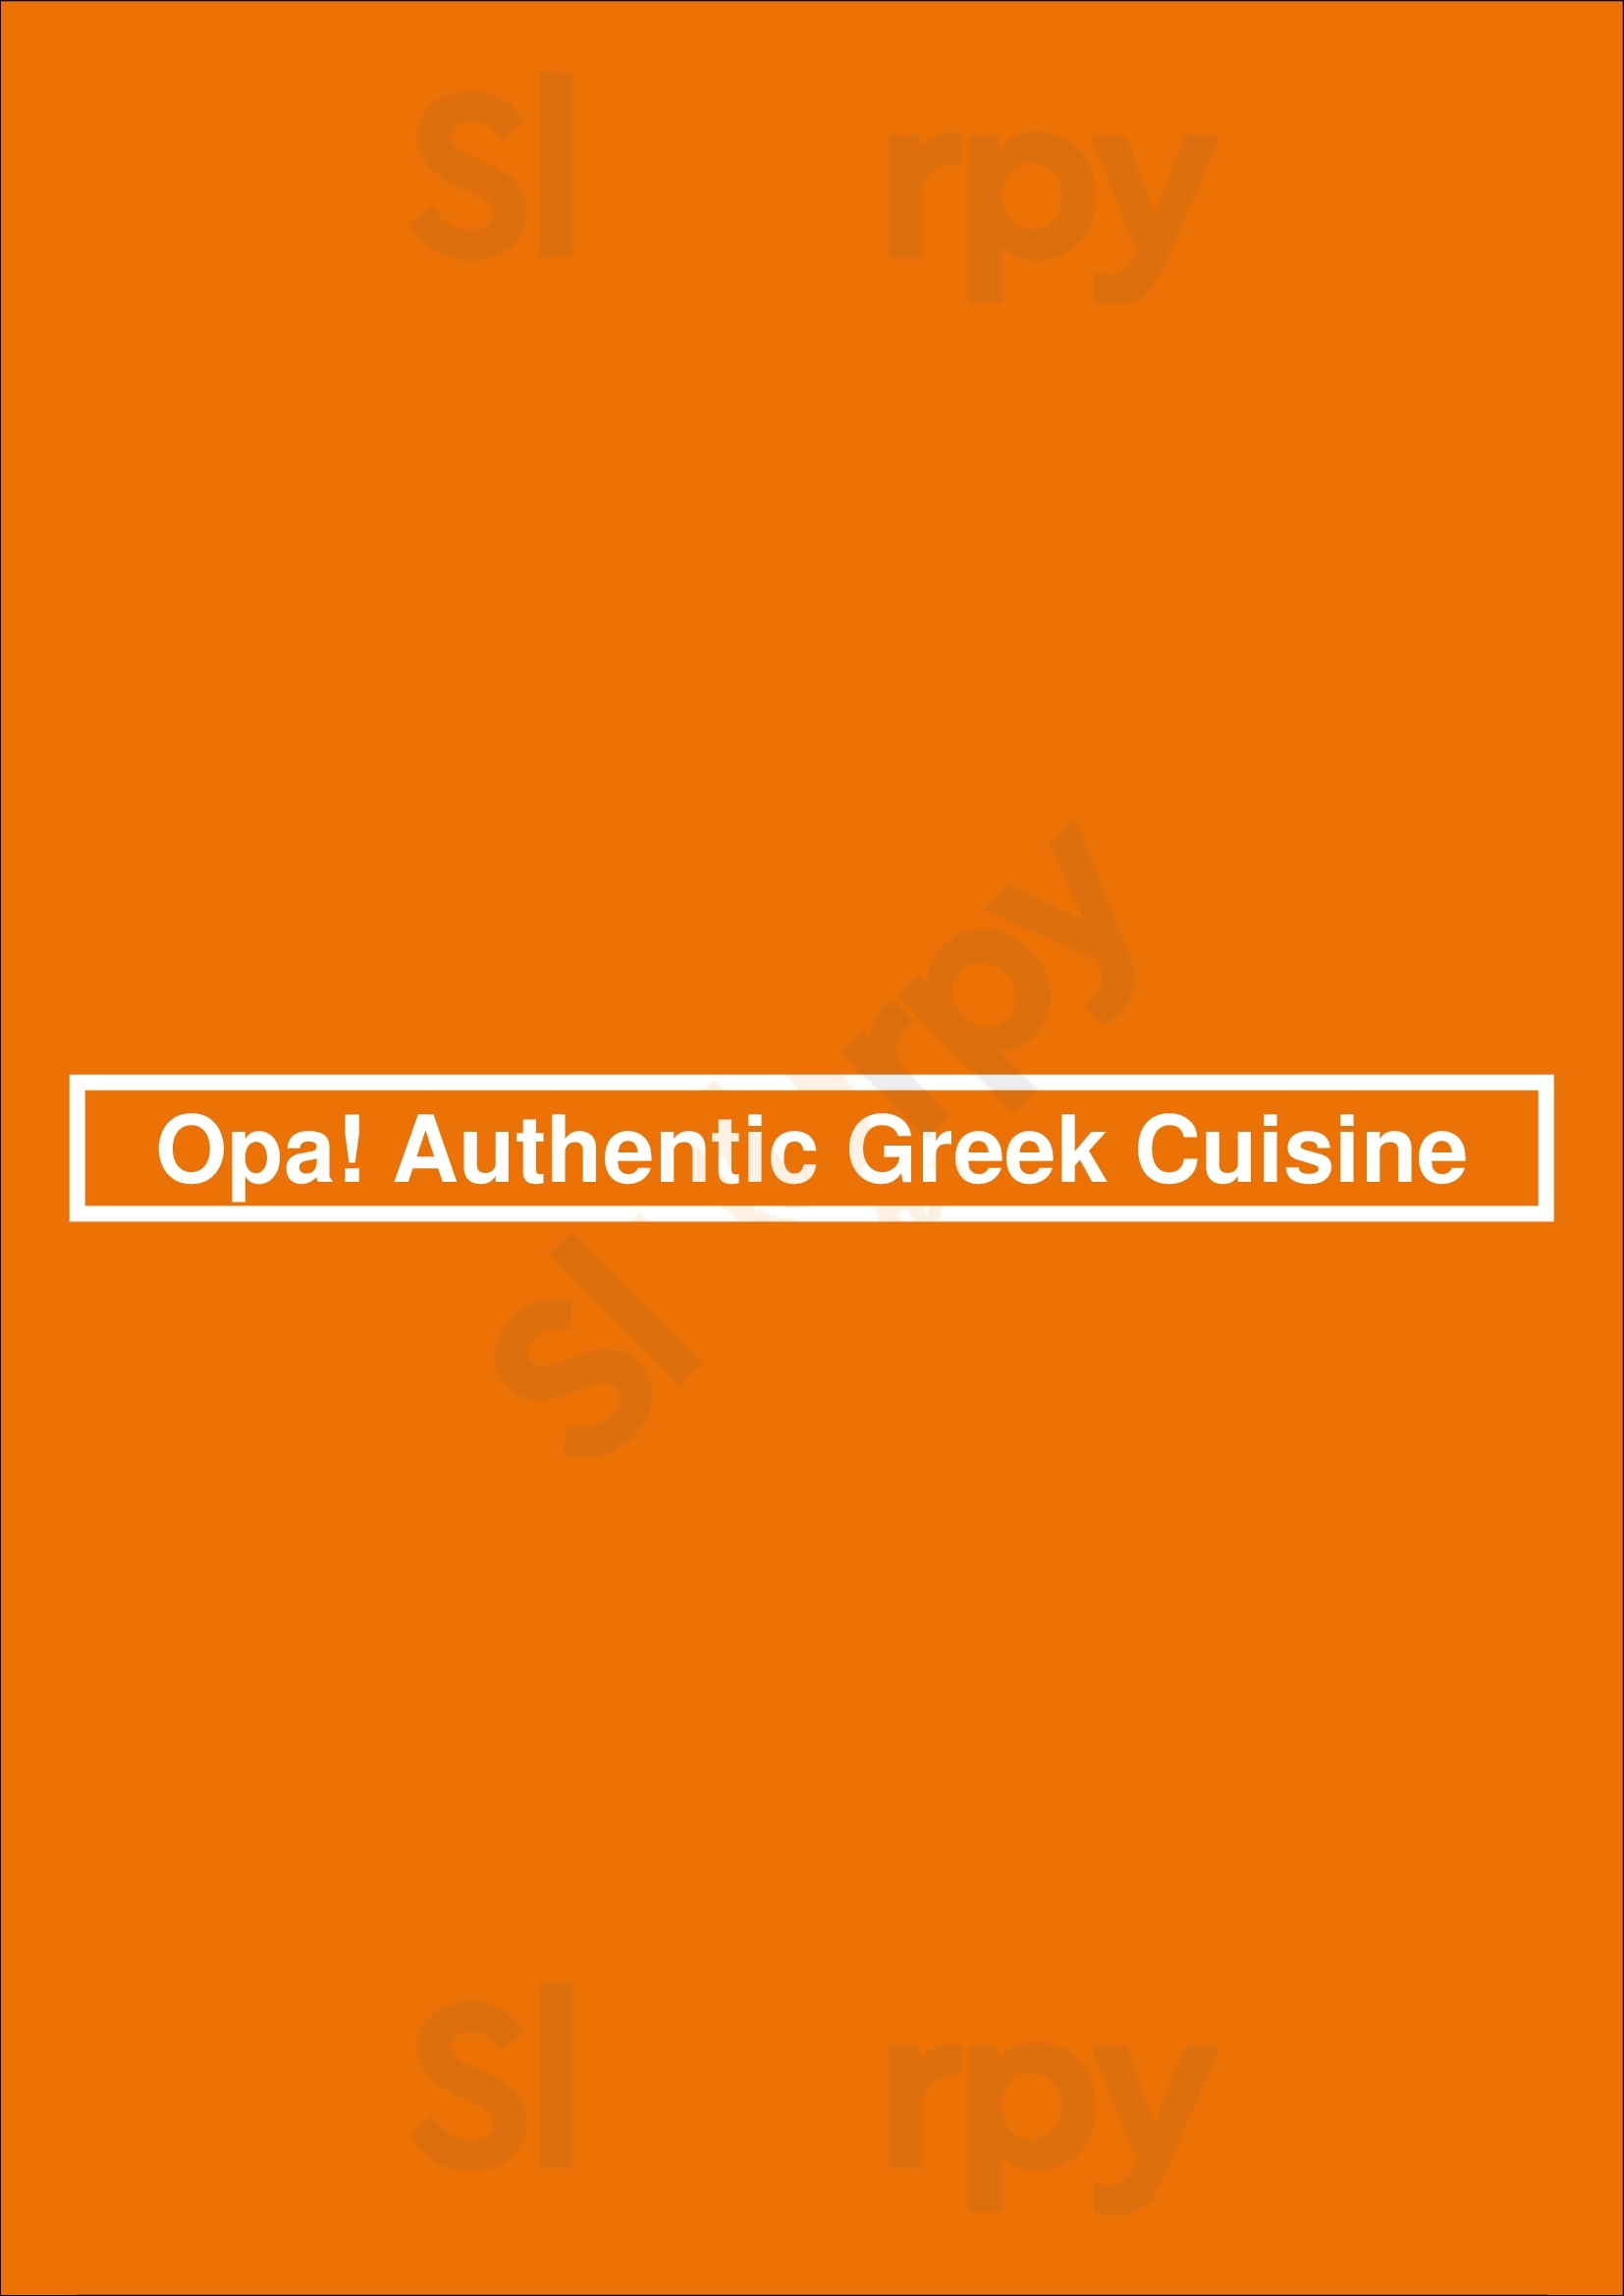 Opa! Authentic Greek Cuisine Los Altos Menu - 1